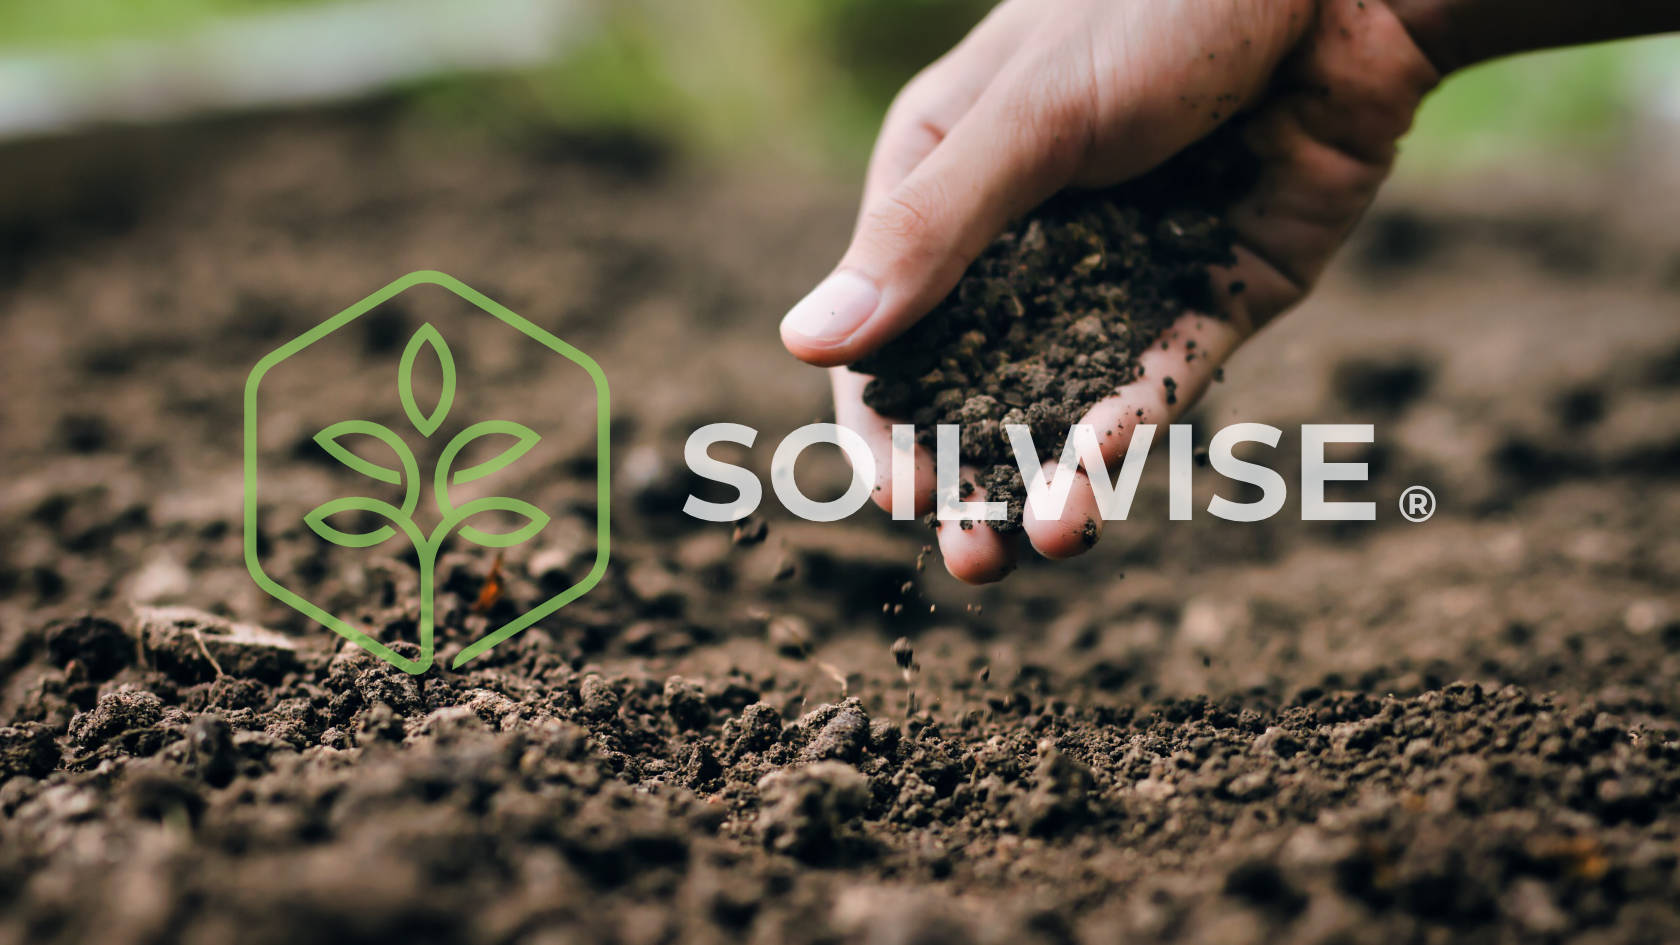 Soilwise - onze nieuwe merknaam en identiteit